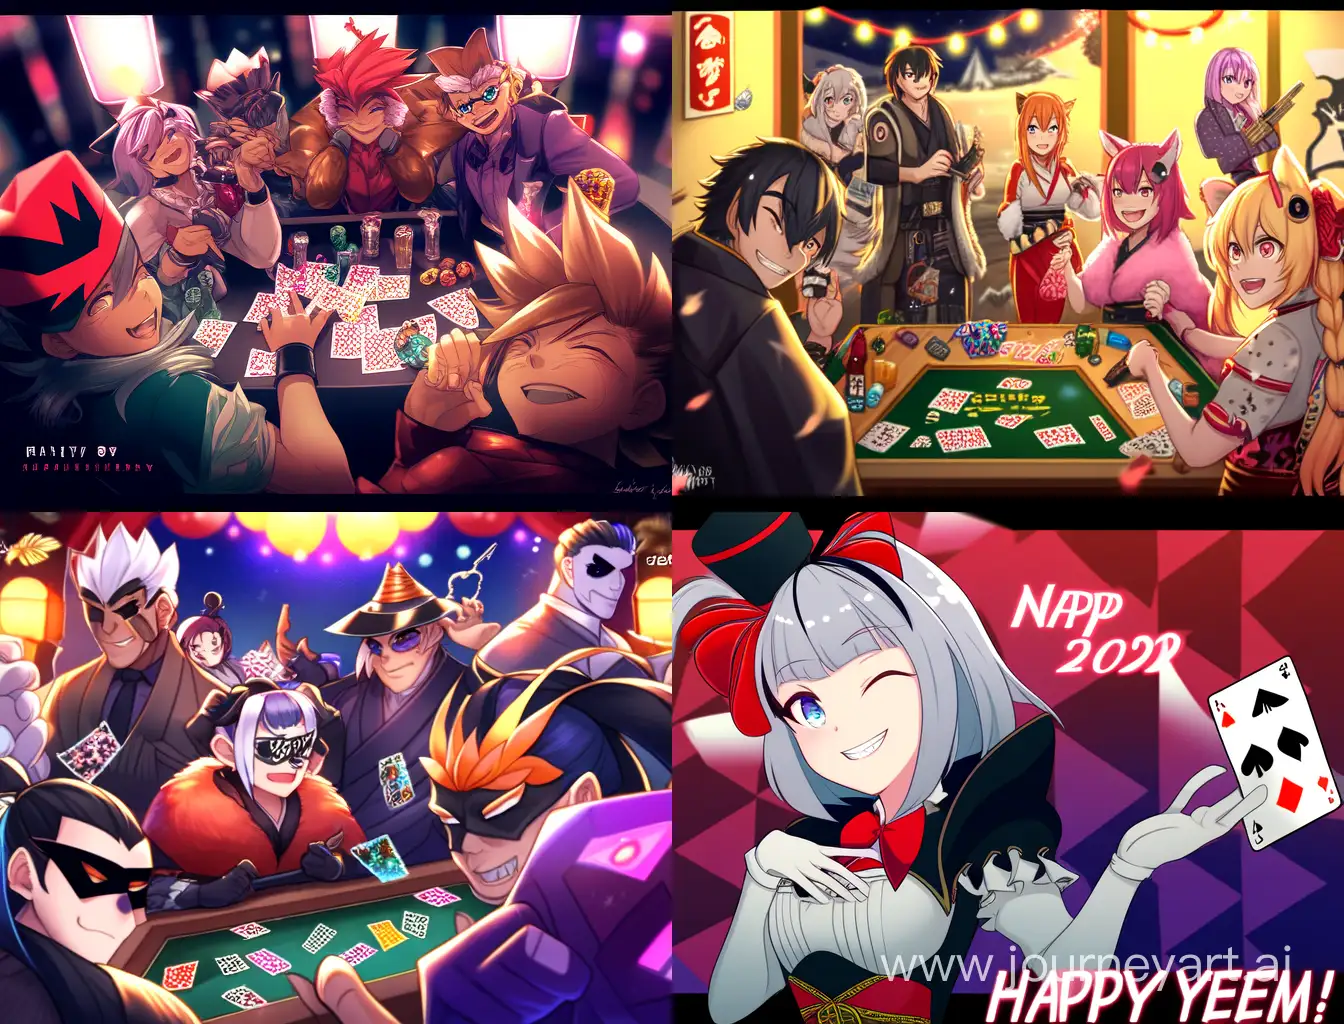 Joyful-New-Year-Celebration-with-Poker-Players